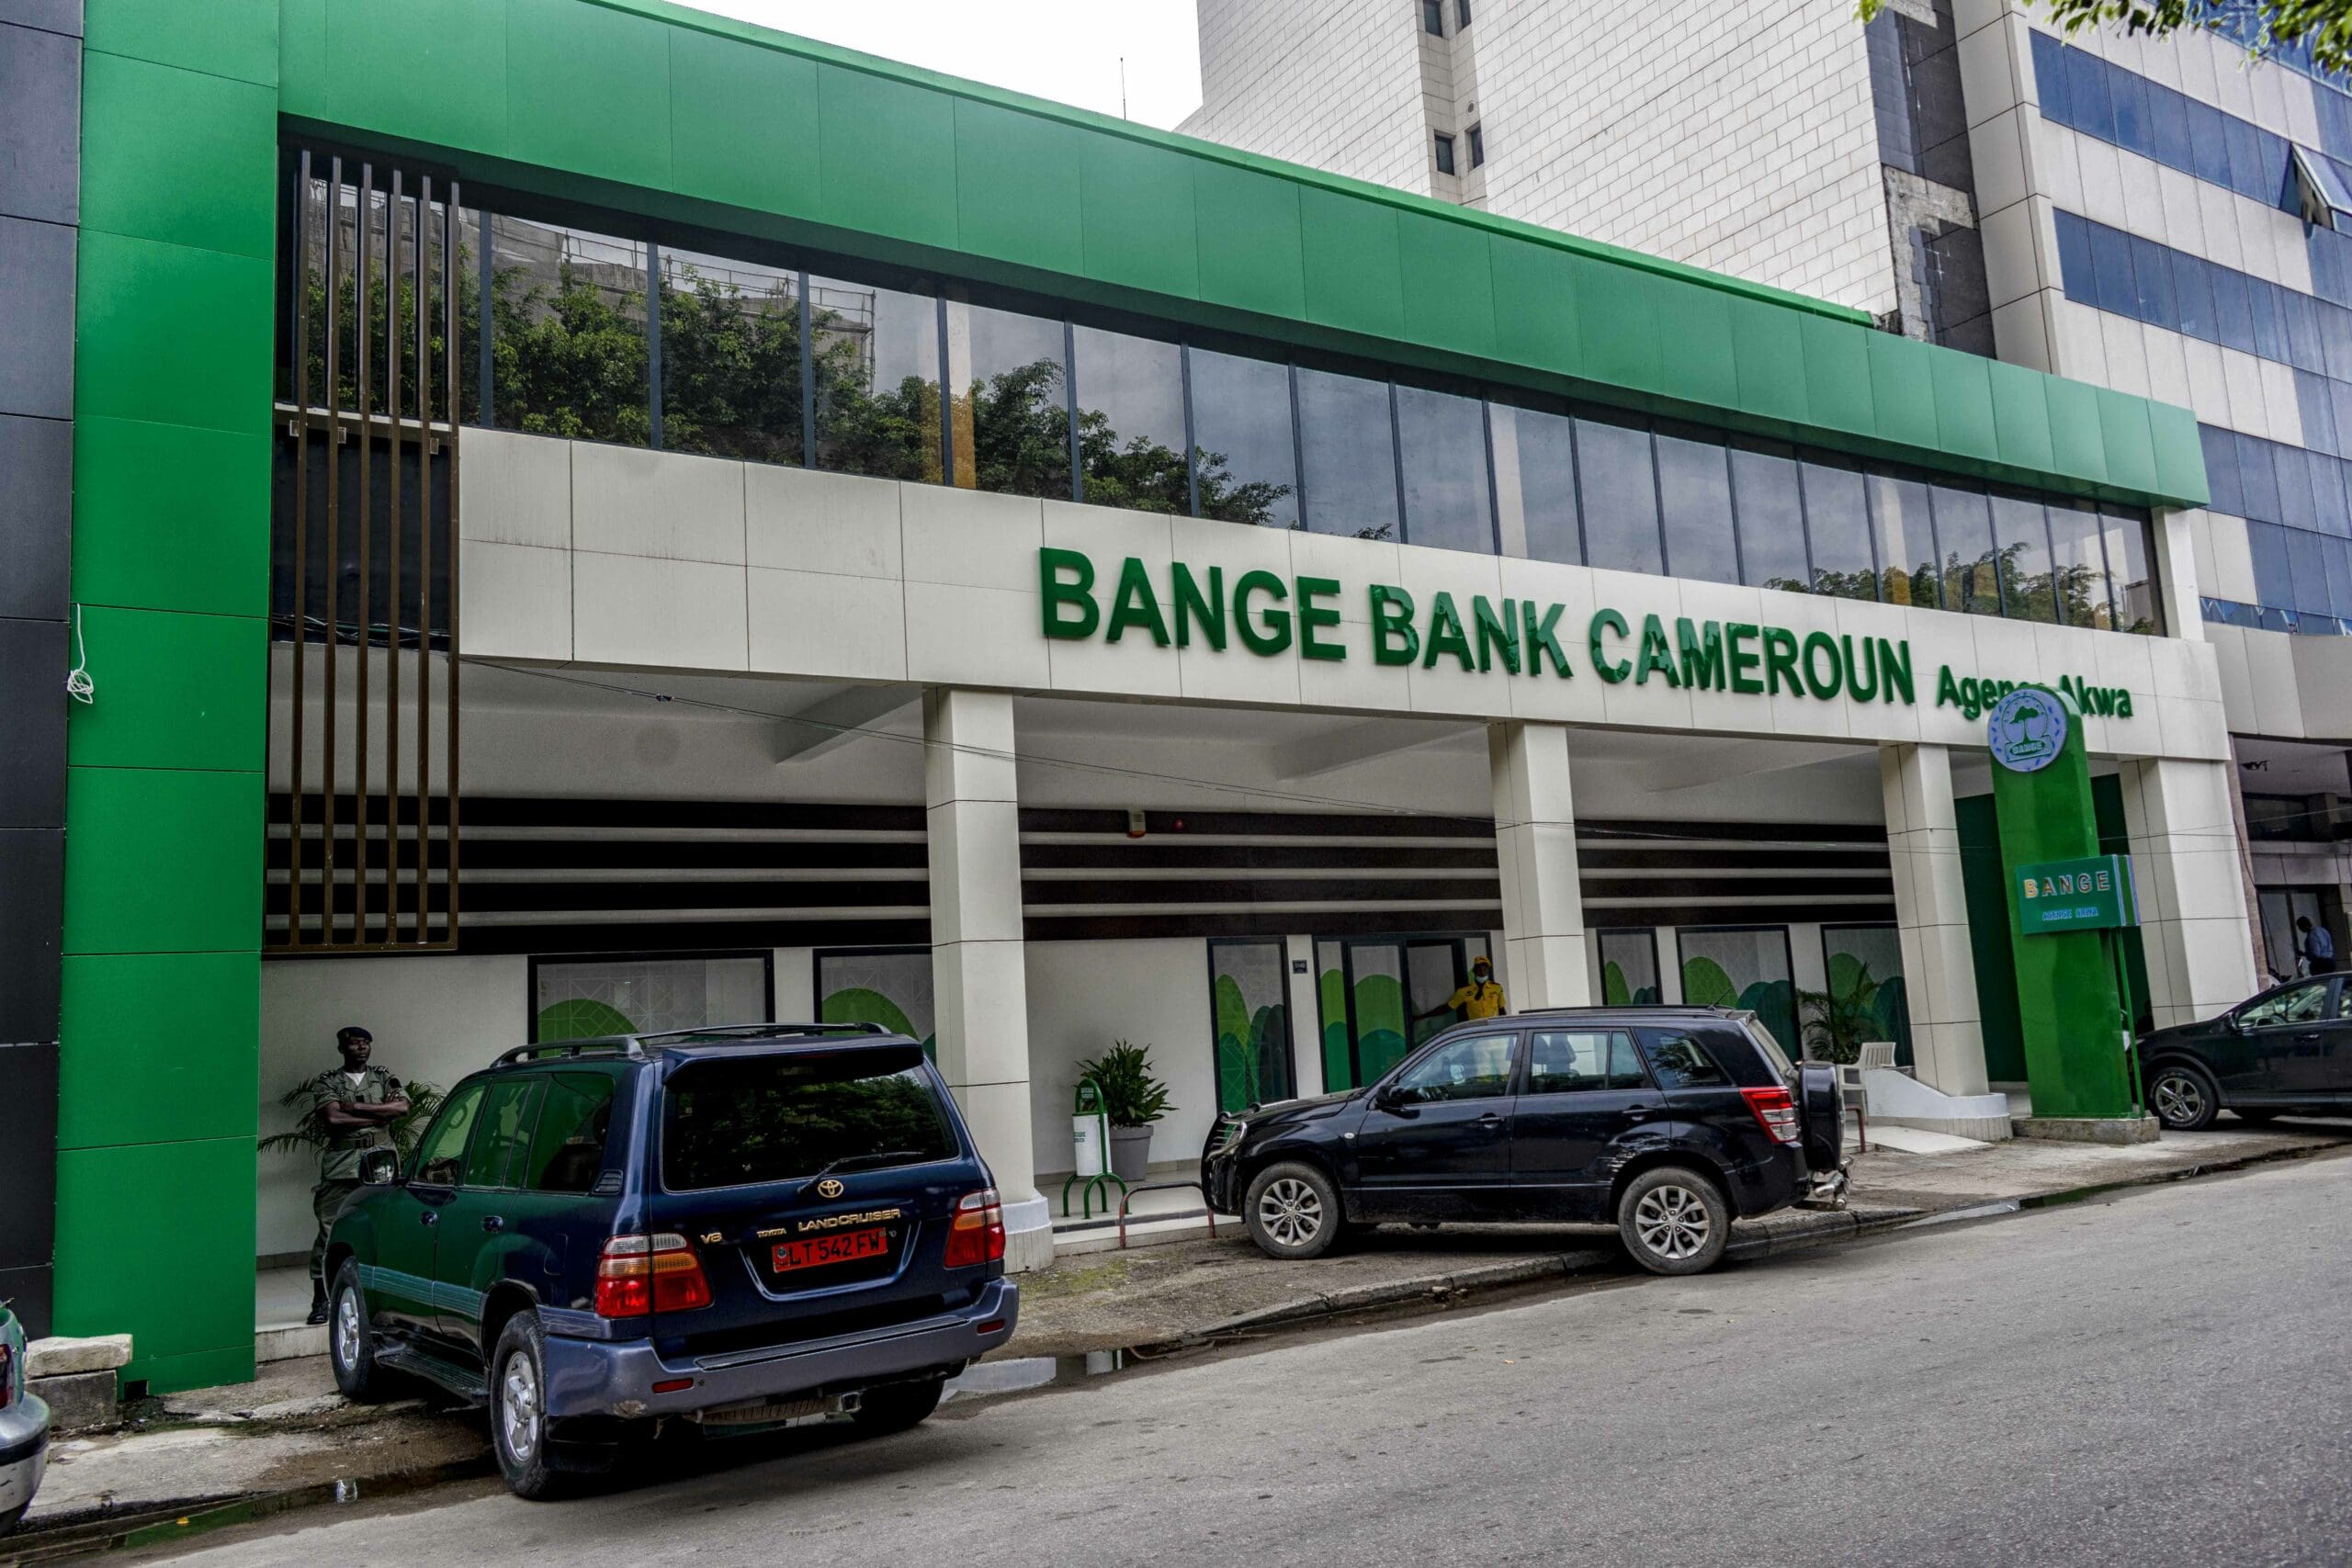 Ministers visit BANGE BANK Akwa